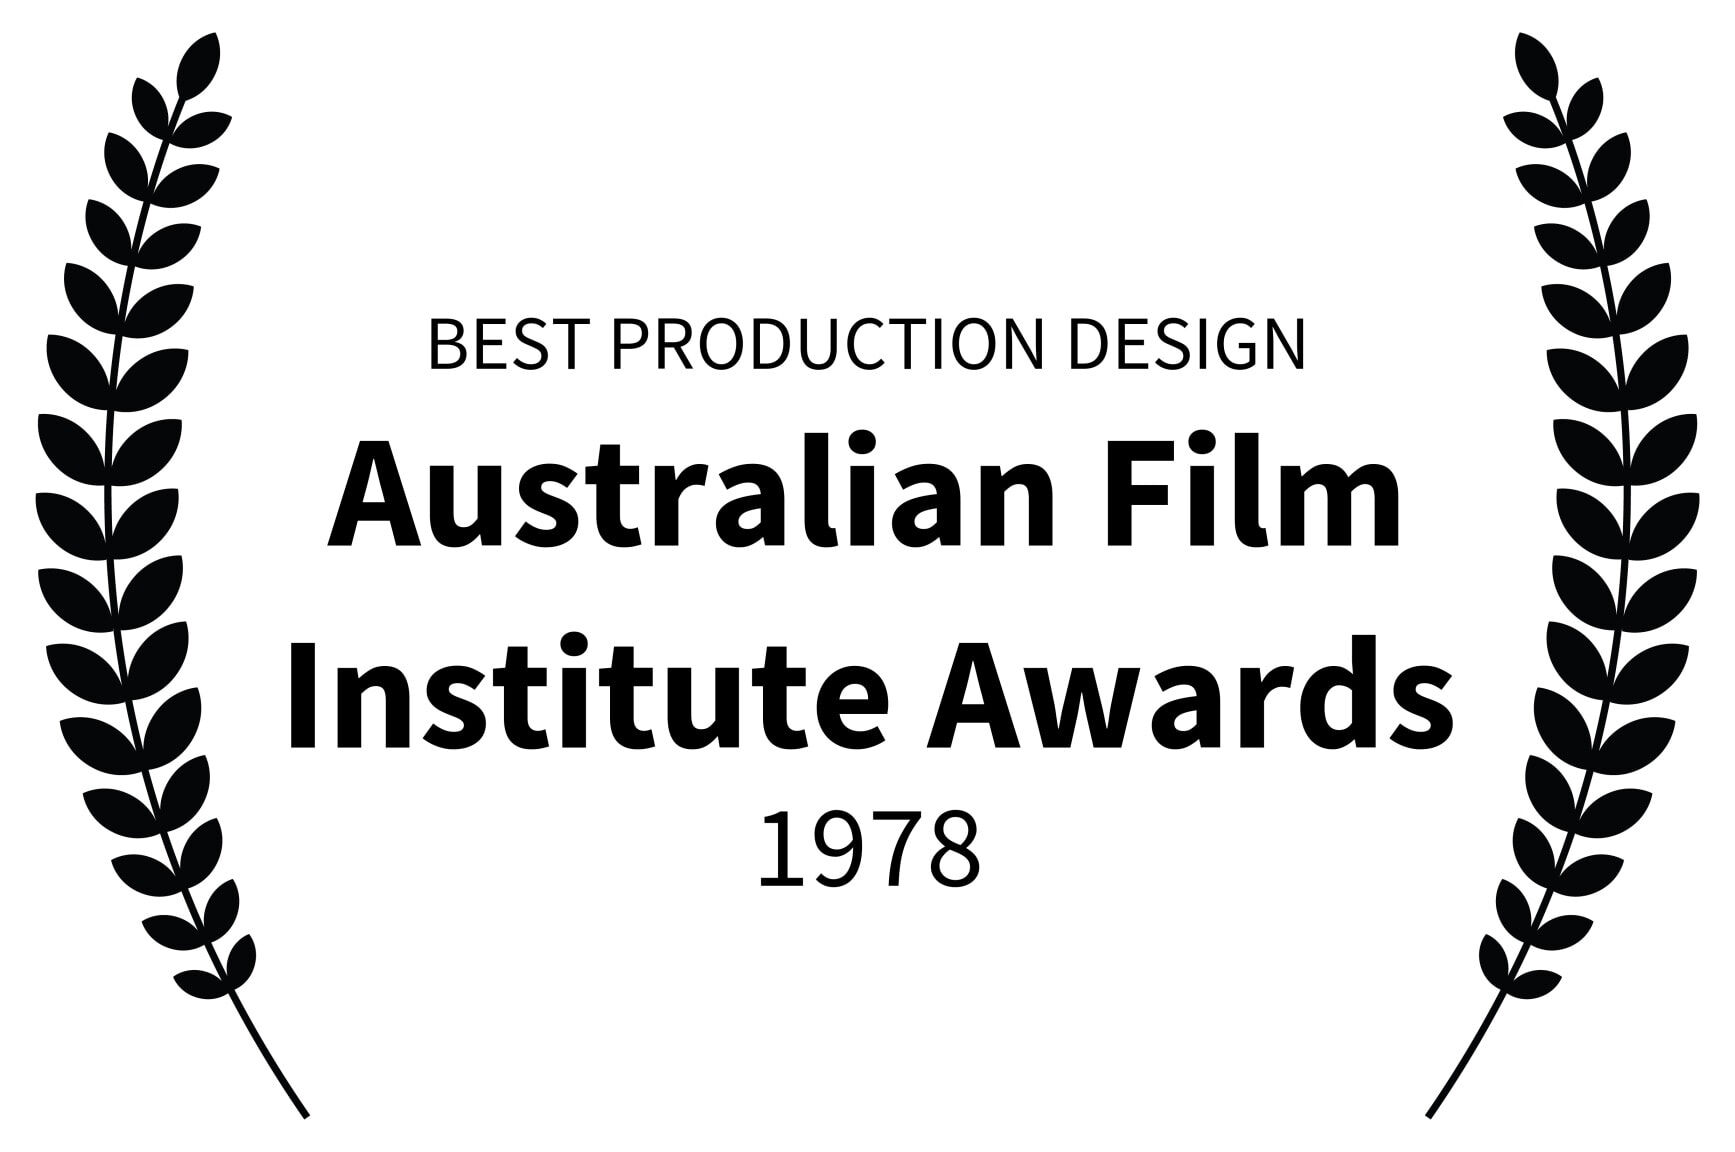 BEST PRODUCTION DESIGN - Australian Film Institute Awards - 1978